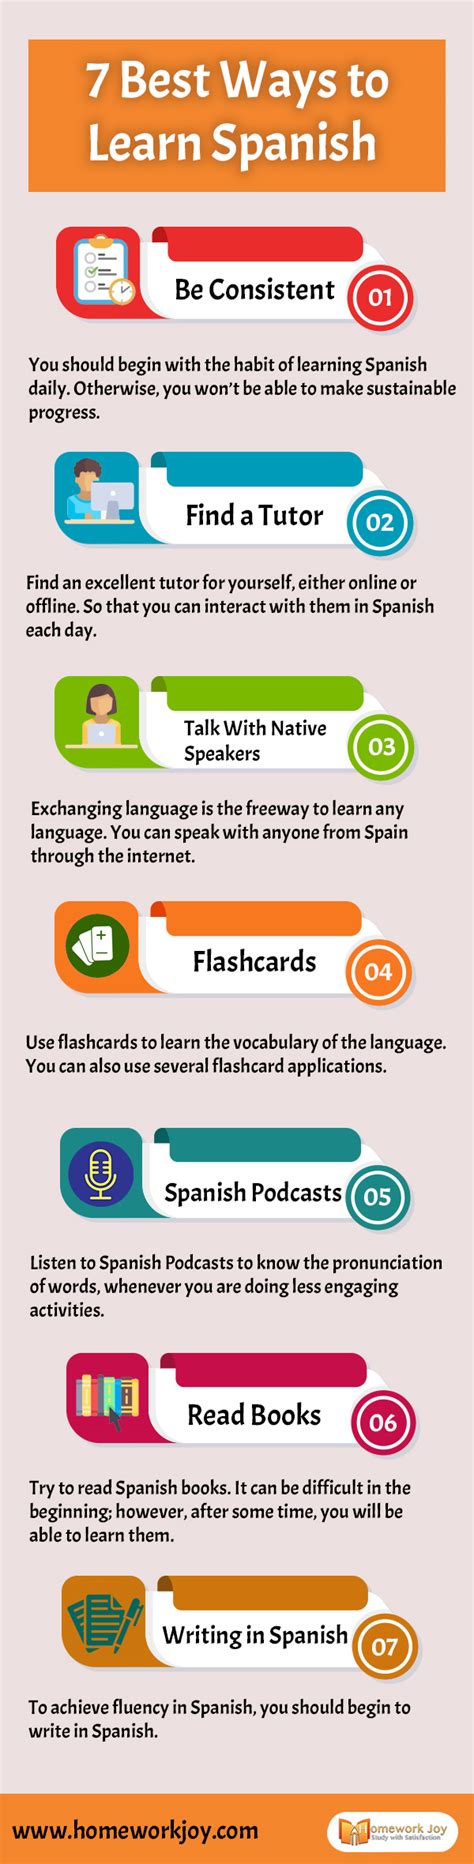 7 Amazing Ways To Learn Spanish Fast Homework Joy